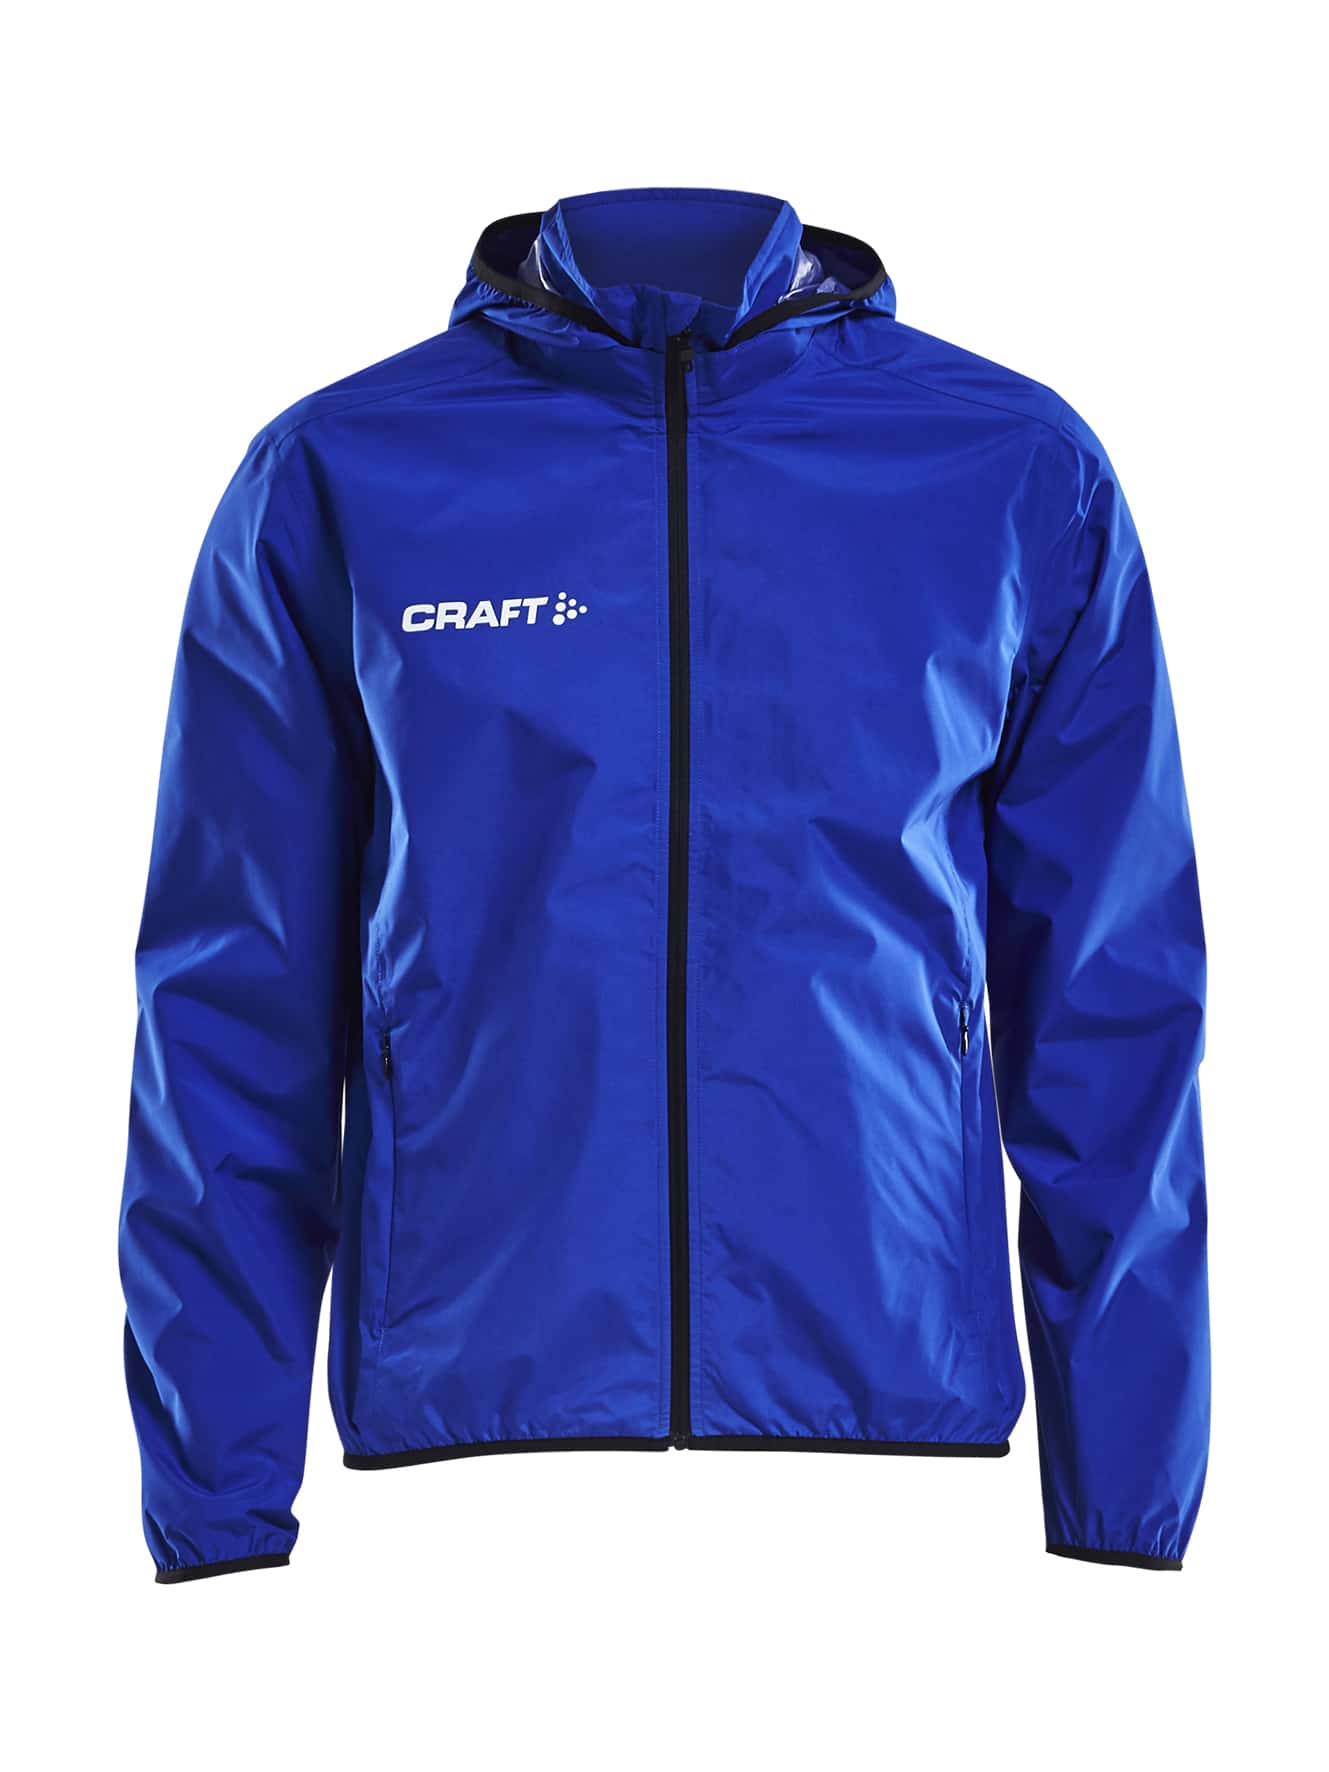 Craft - Jacket Rain Maend - Club Cobolt XL